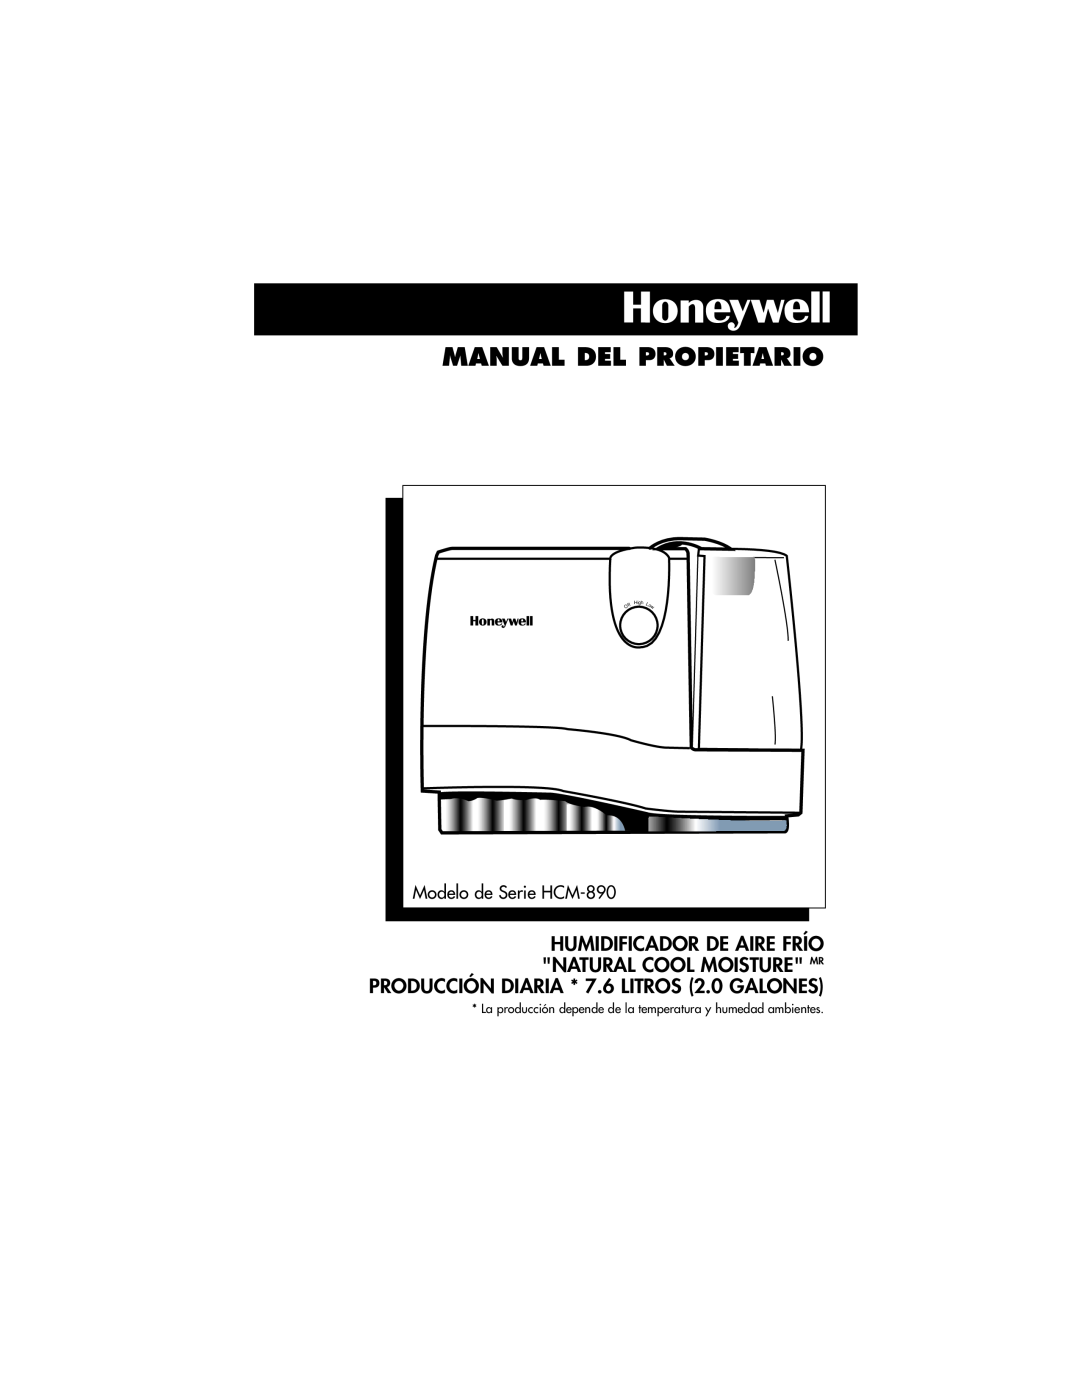 Honeywell HCM-890 owner manual Manual Del Propietario, Humidificador De Aire Frío, High 